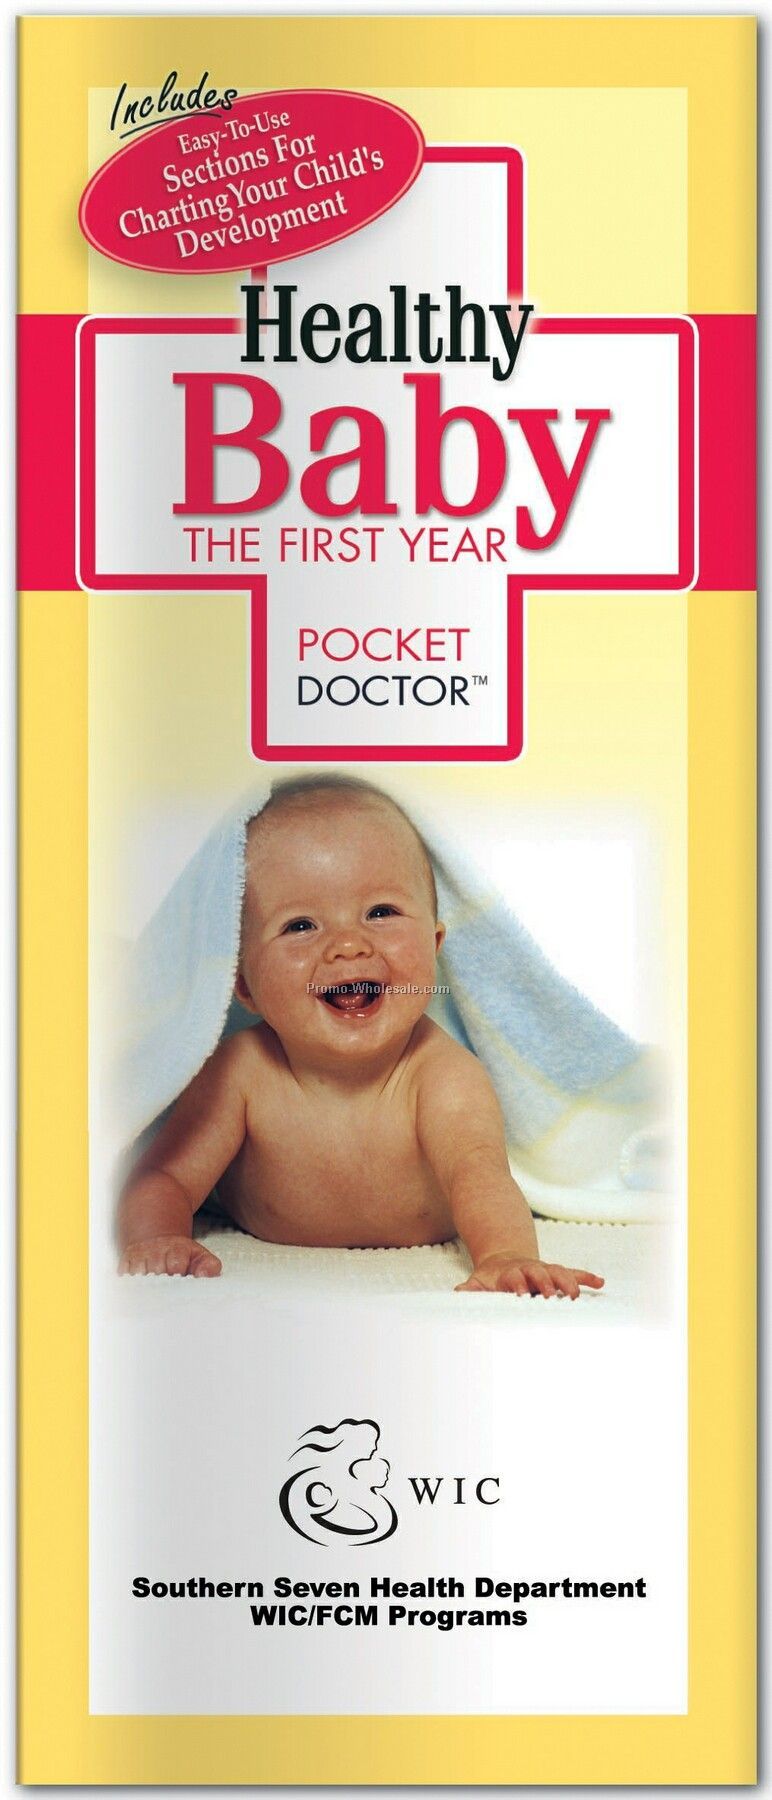 Pillowline Healthy Baby Pocket Doctor Brochure